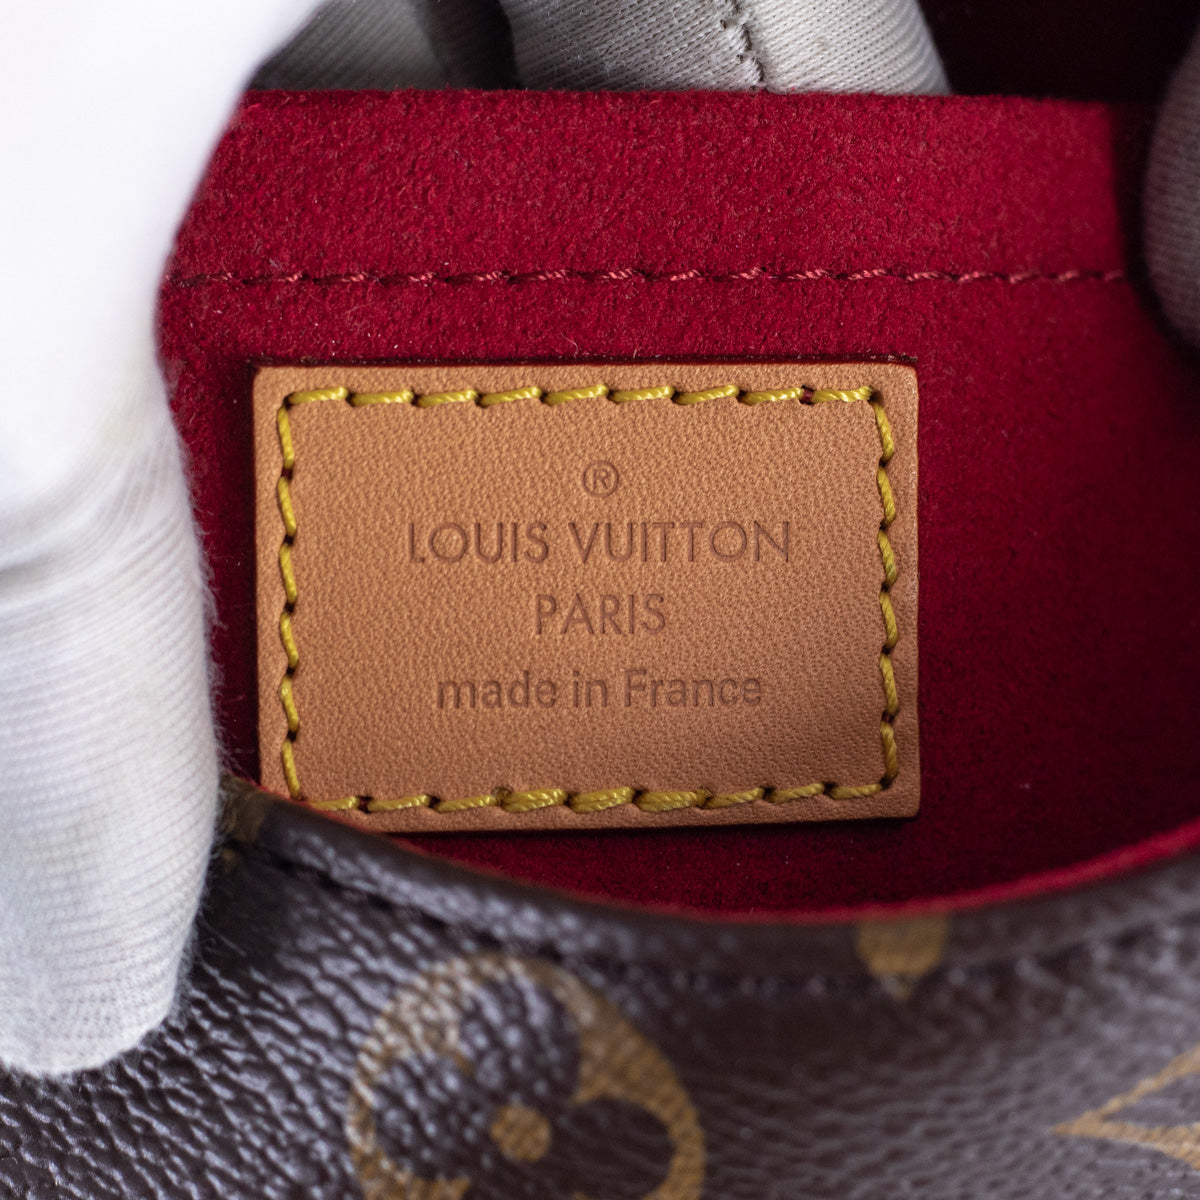 Shop Louis Vuitton Tambour monogram 28mm (QBB165) by lifeisfun